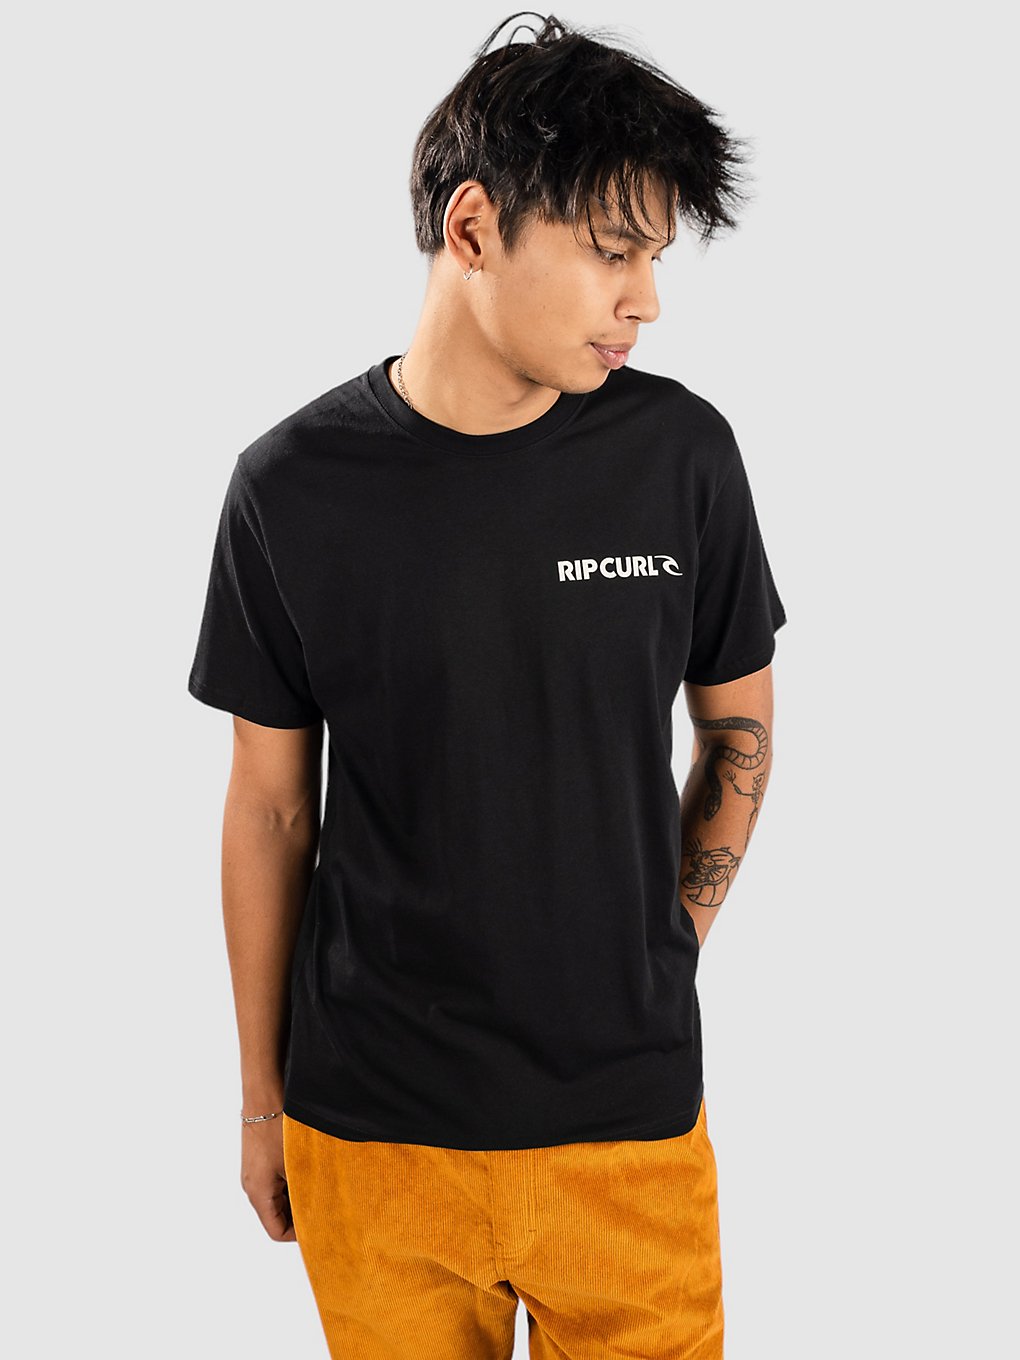 Rip Curl Brand Icon T-Shirt black kaufen